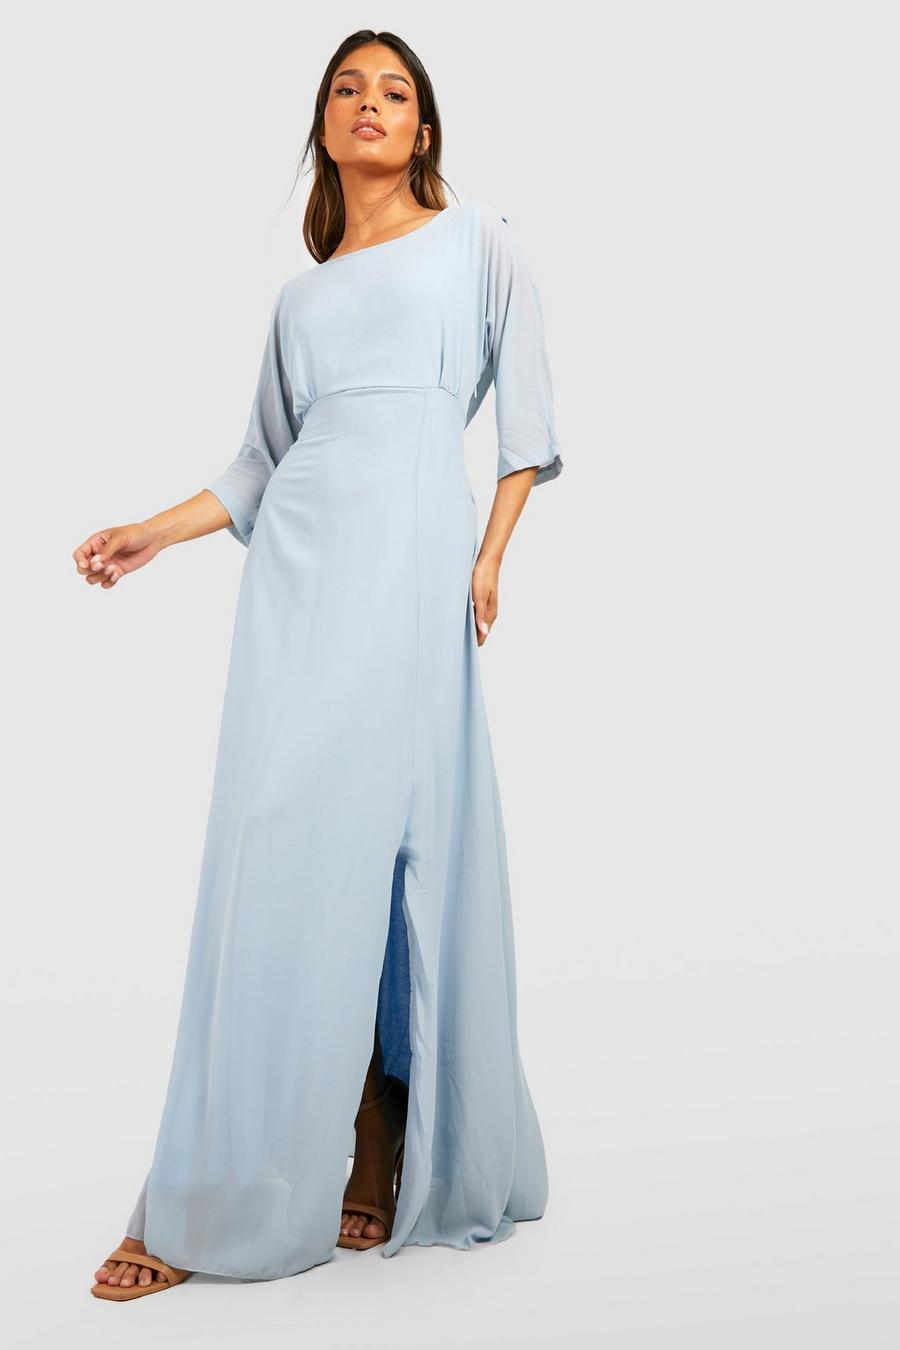 Pastel blue שמלת מקסי עם מחשוף נשפך בגב עם אפקט וילון